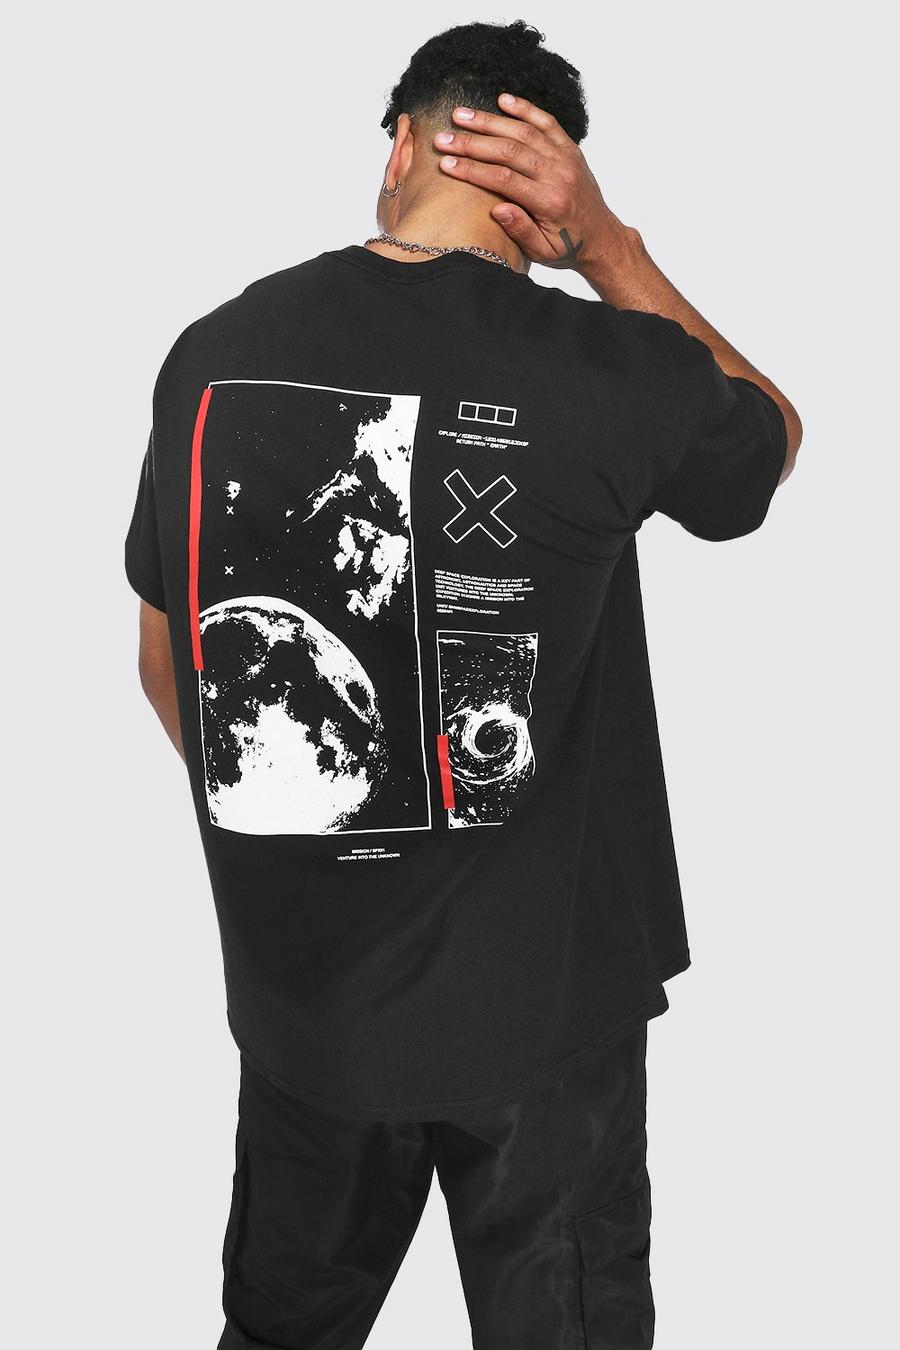 Black svart Oversize t-shirt med rymdmotiv